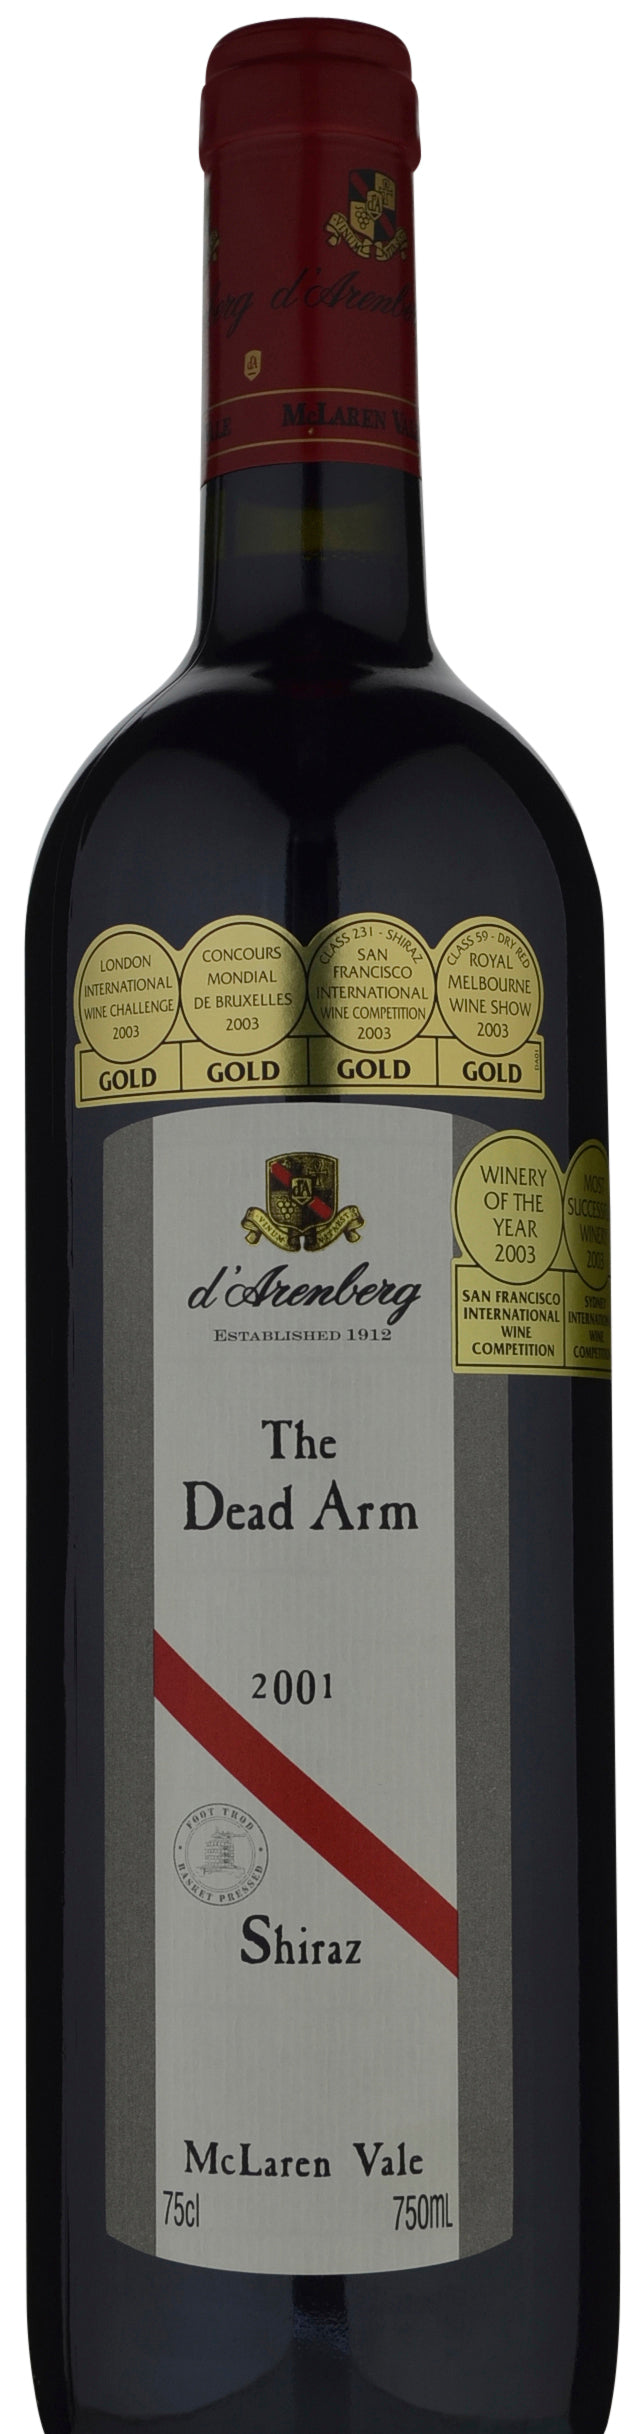 d'Arenberg The Dead Arm Shiraz 2001